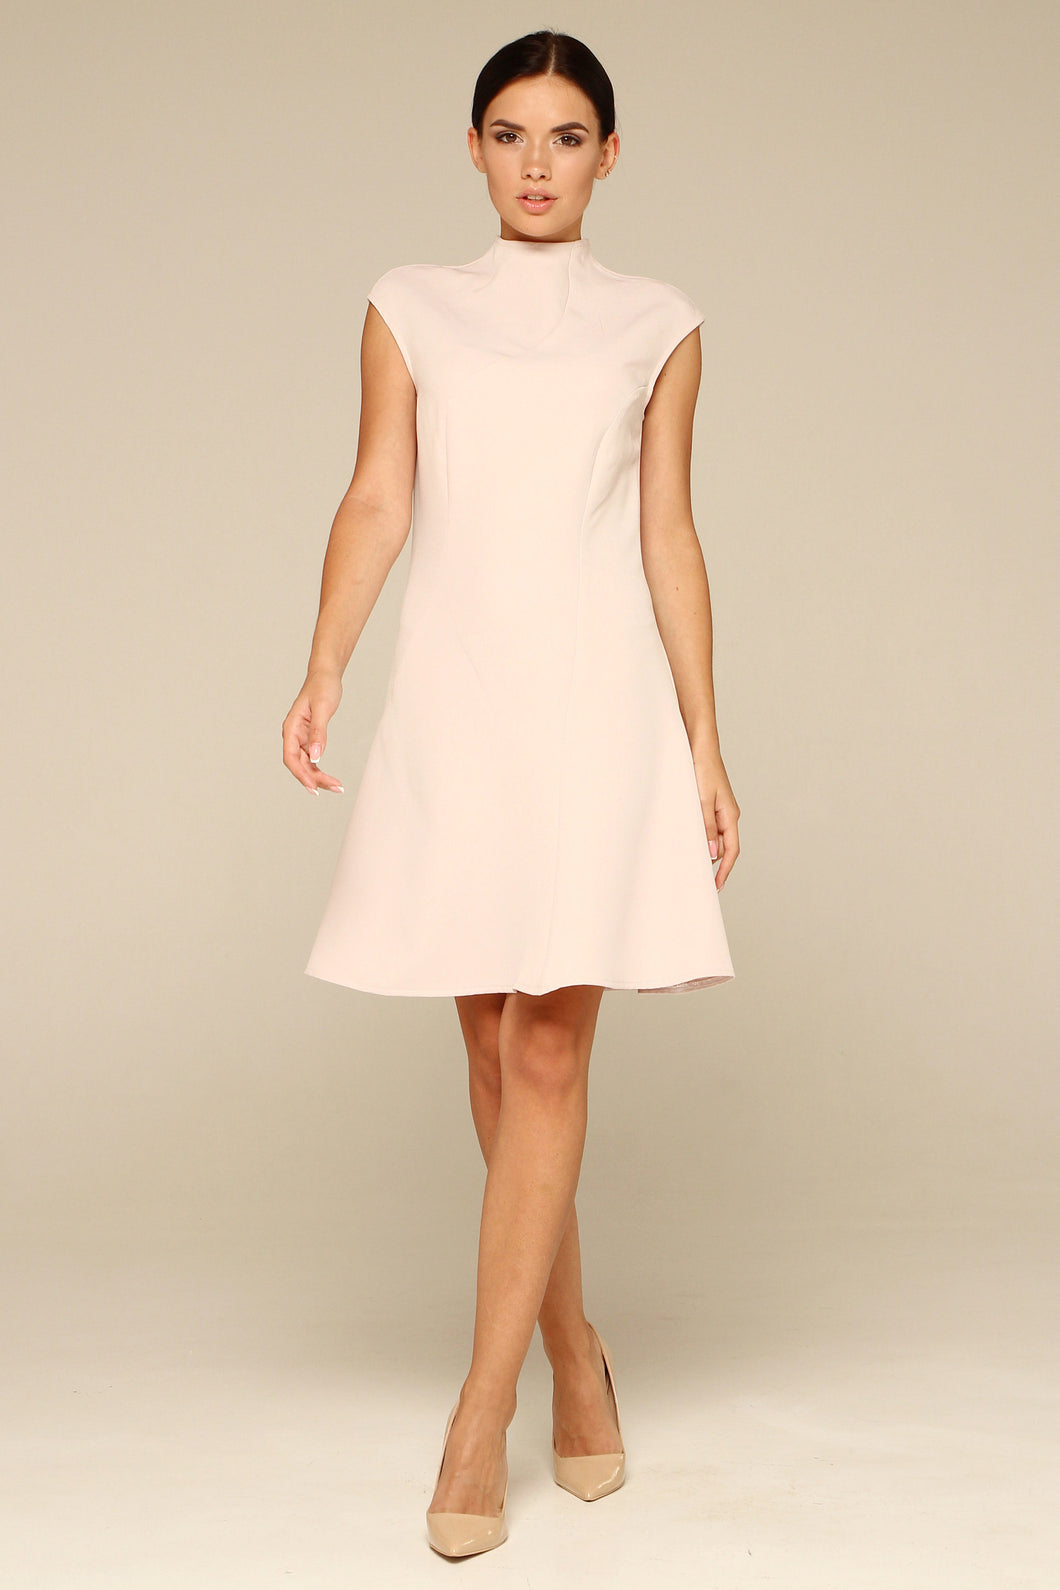 White asymmetrical high neck mini dress